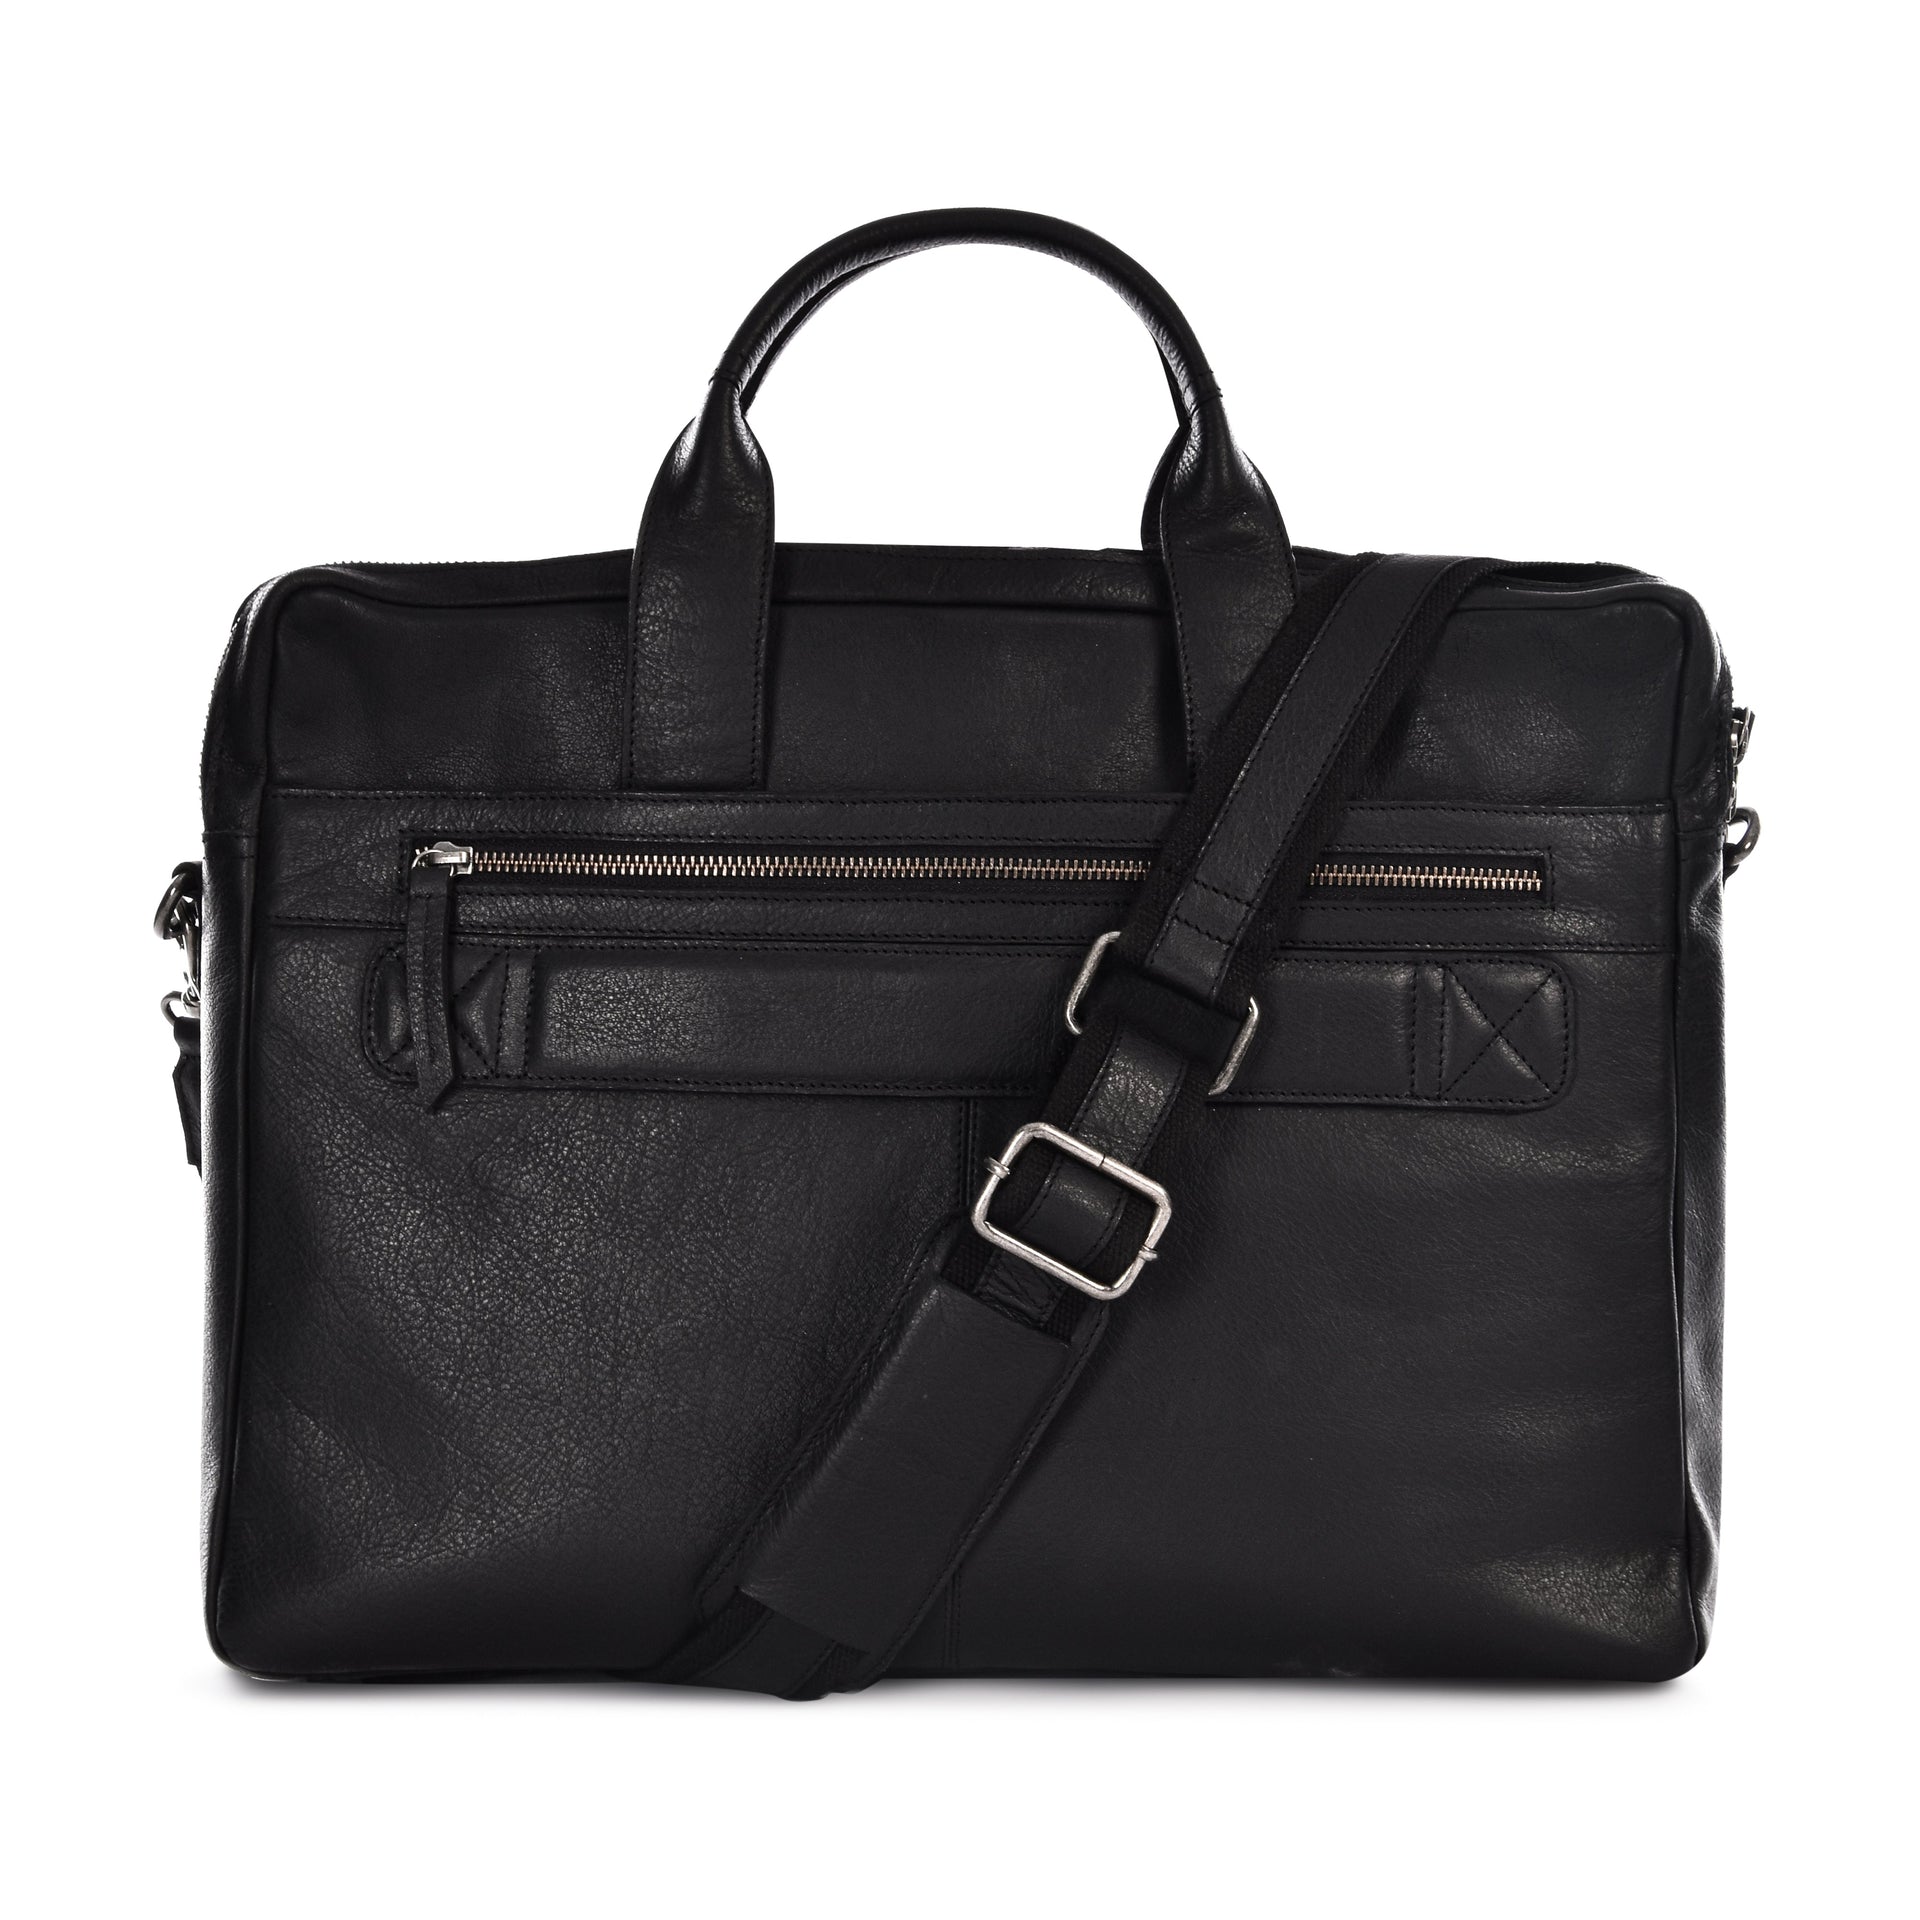 League Business Bag - Two Compartments - Verico Black - 